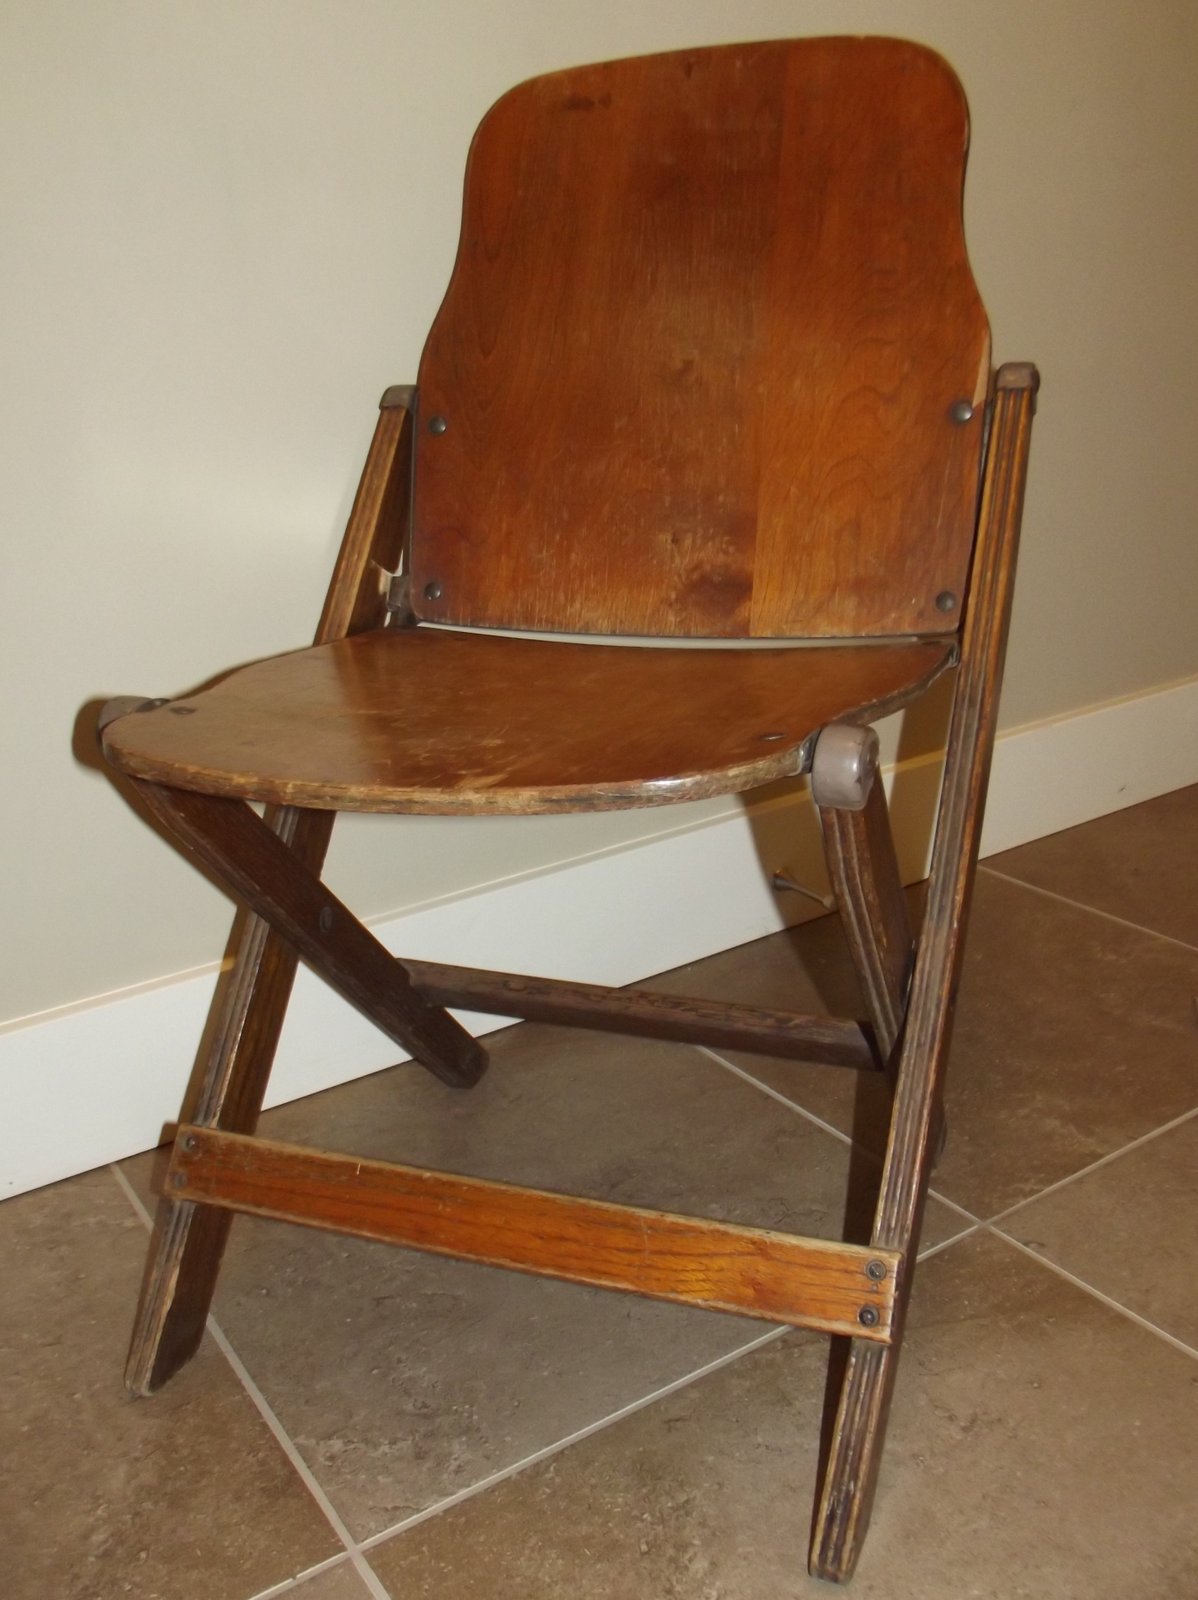 wooden folding chair designs